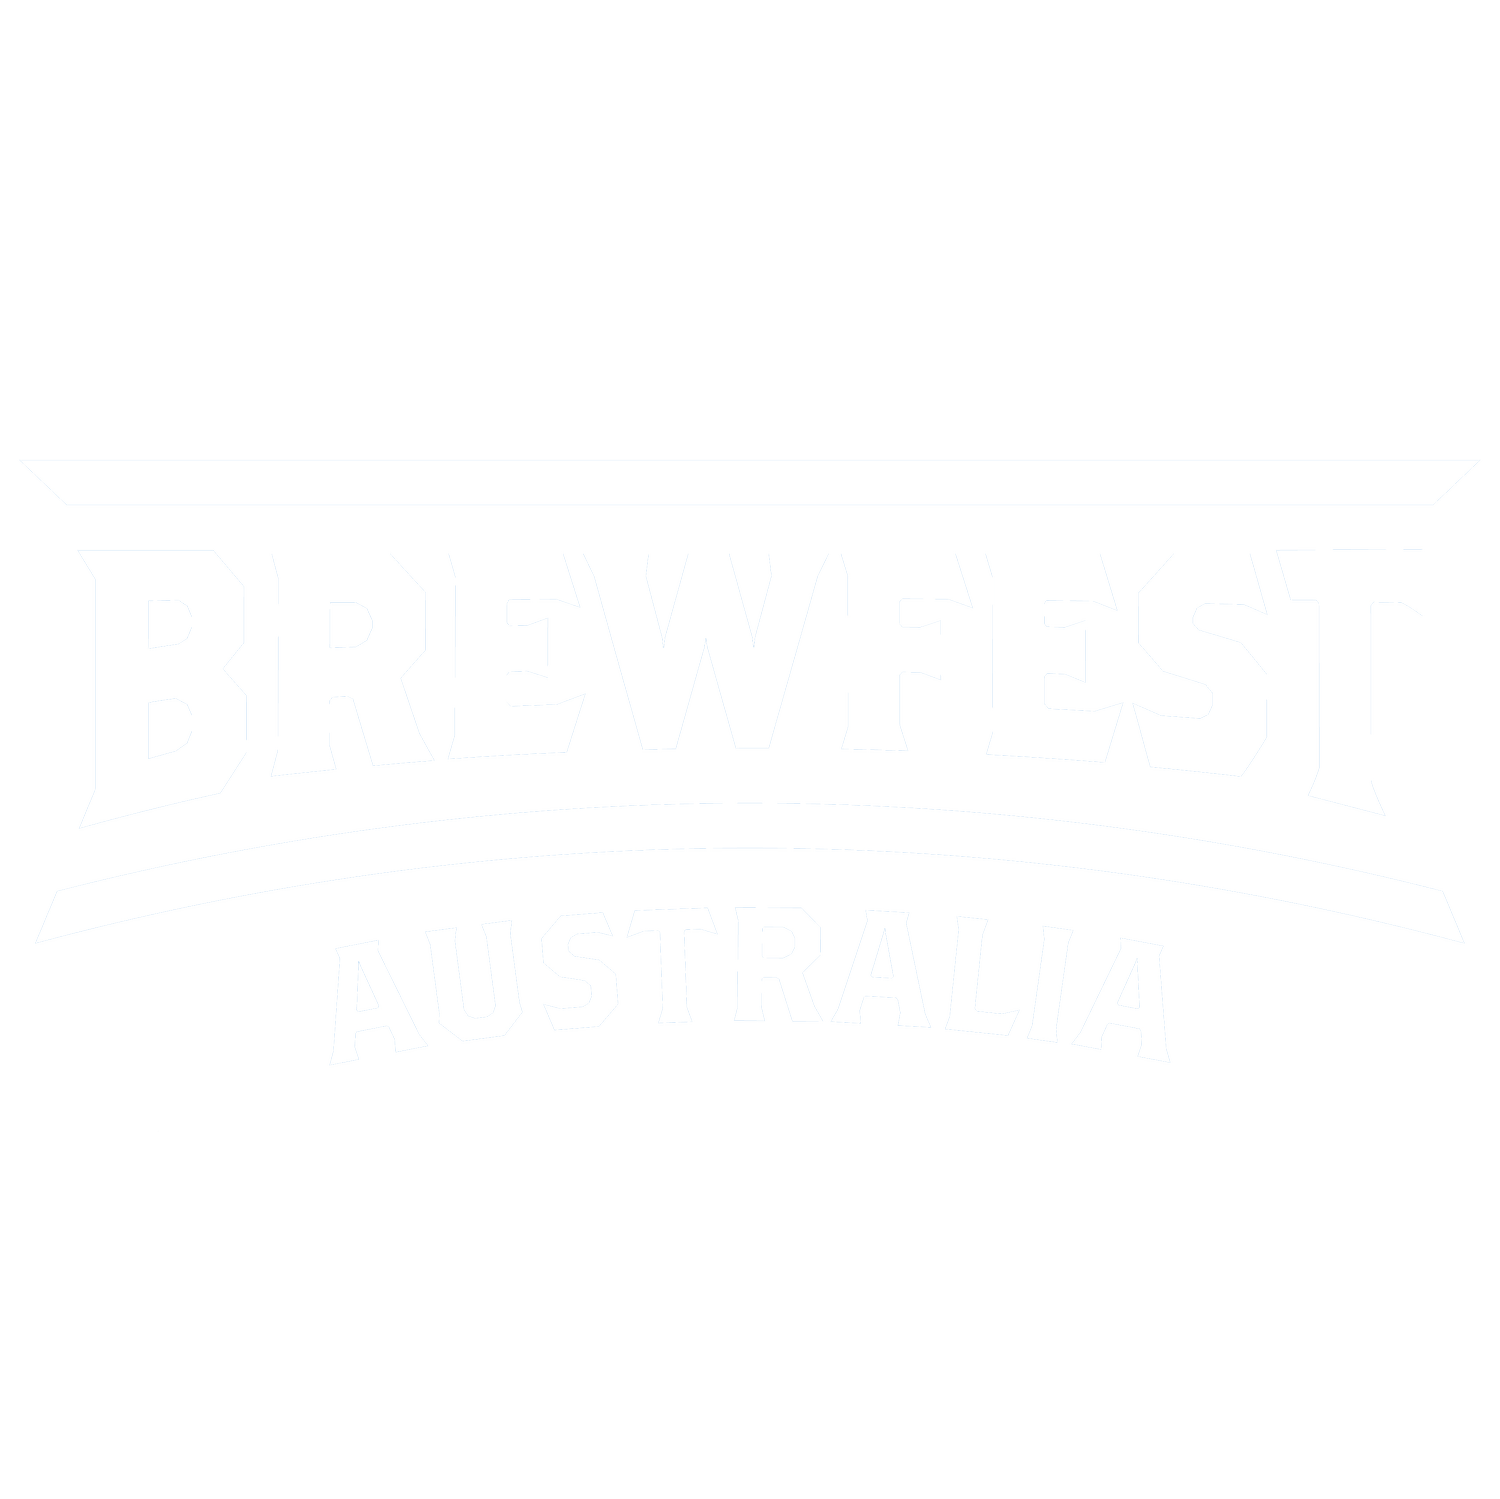 Brew Fest Australia